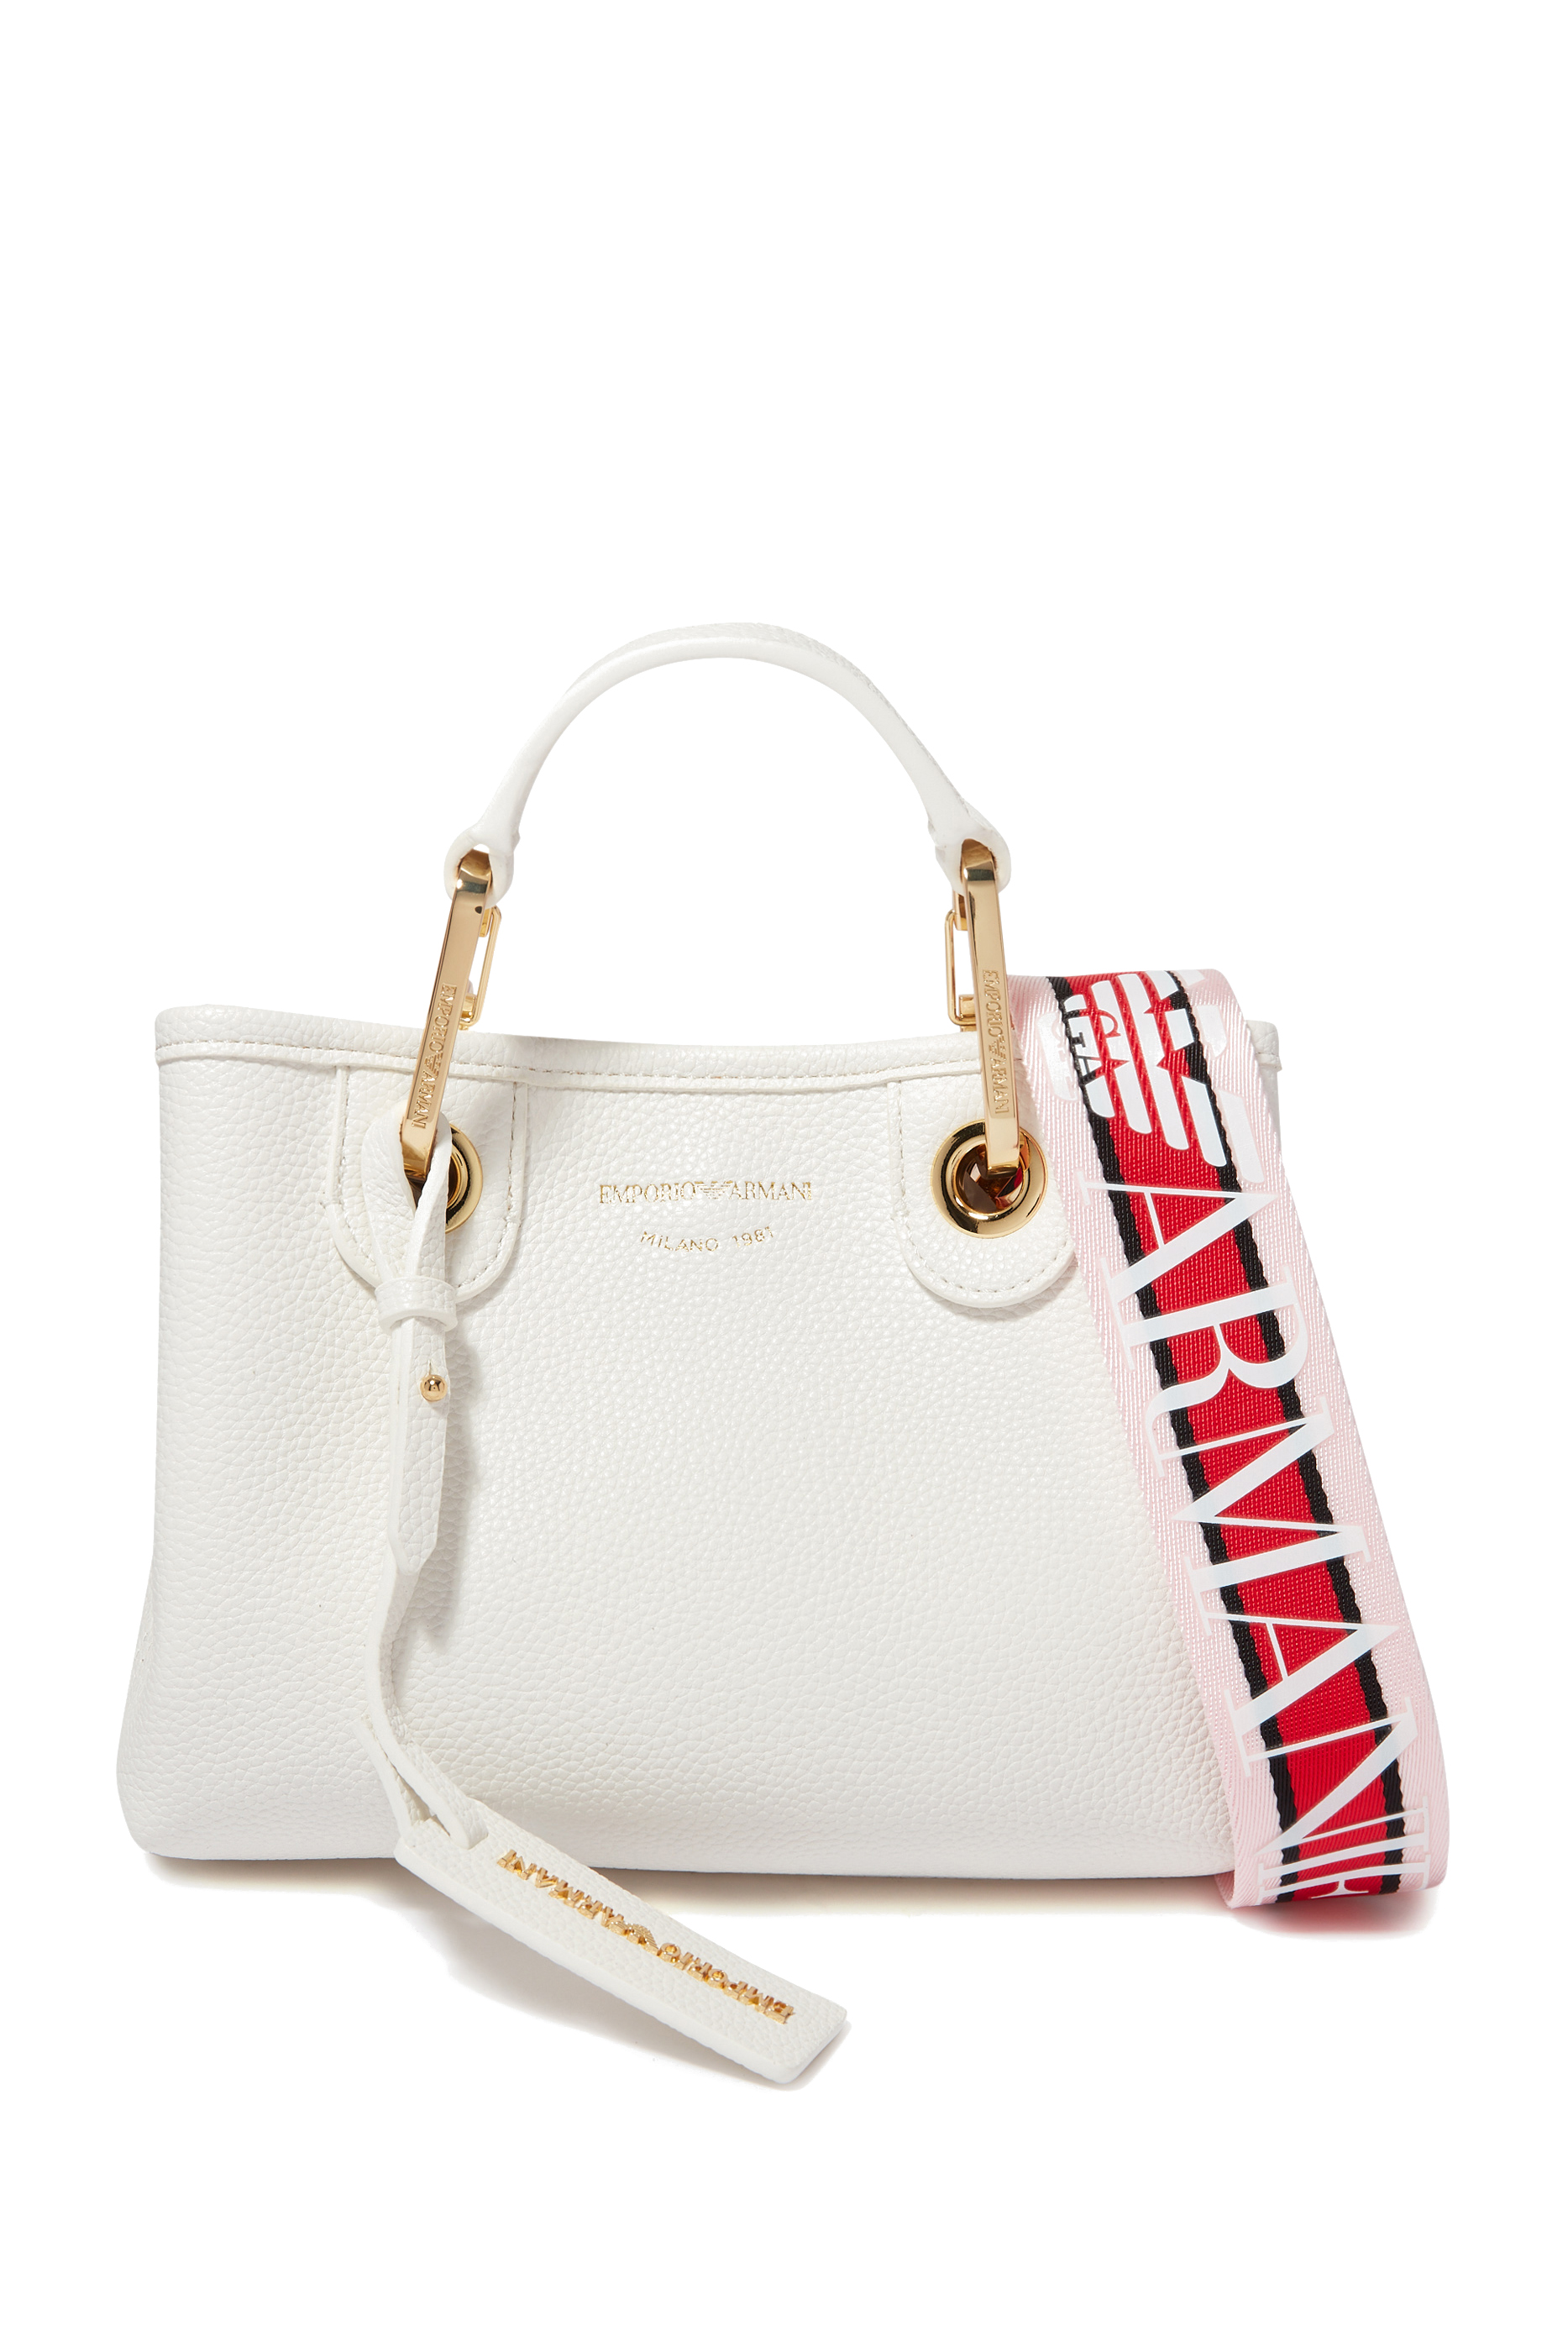 Giorgio Armani Handbags | Neiman Marcus